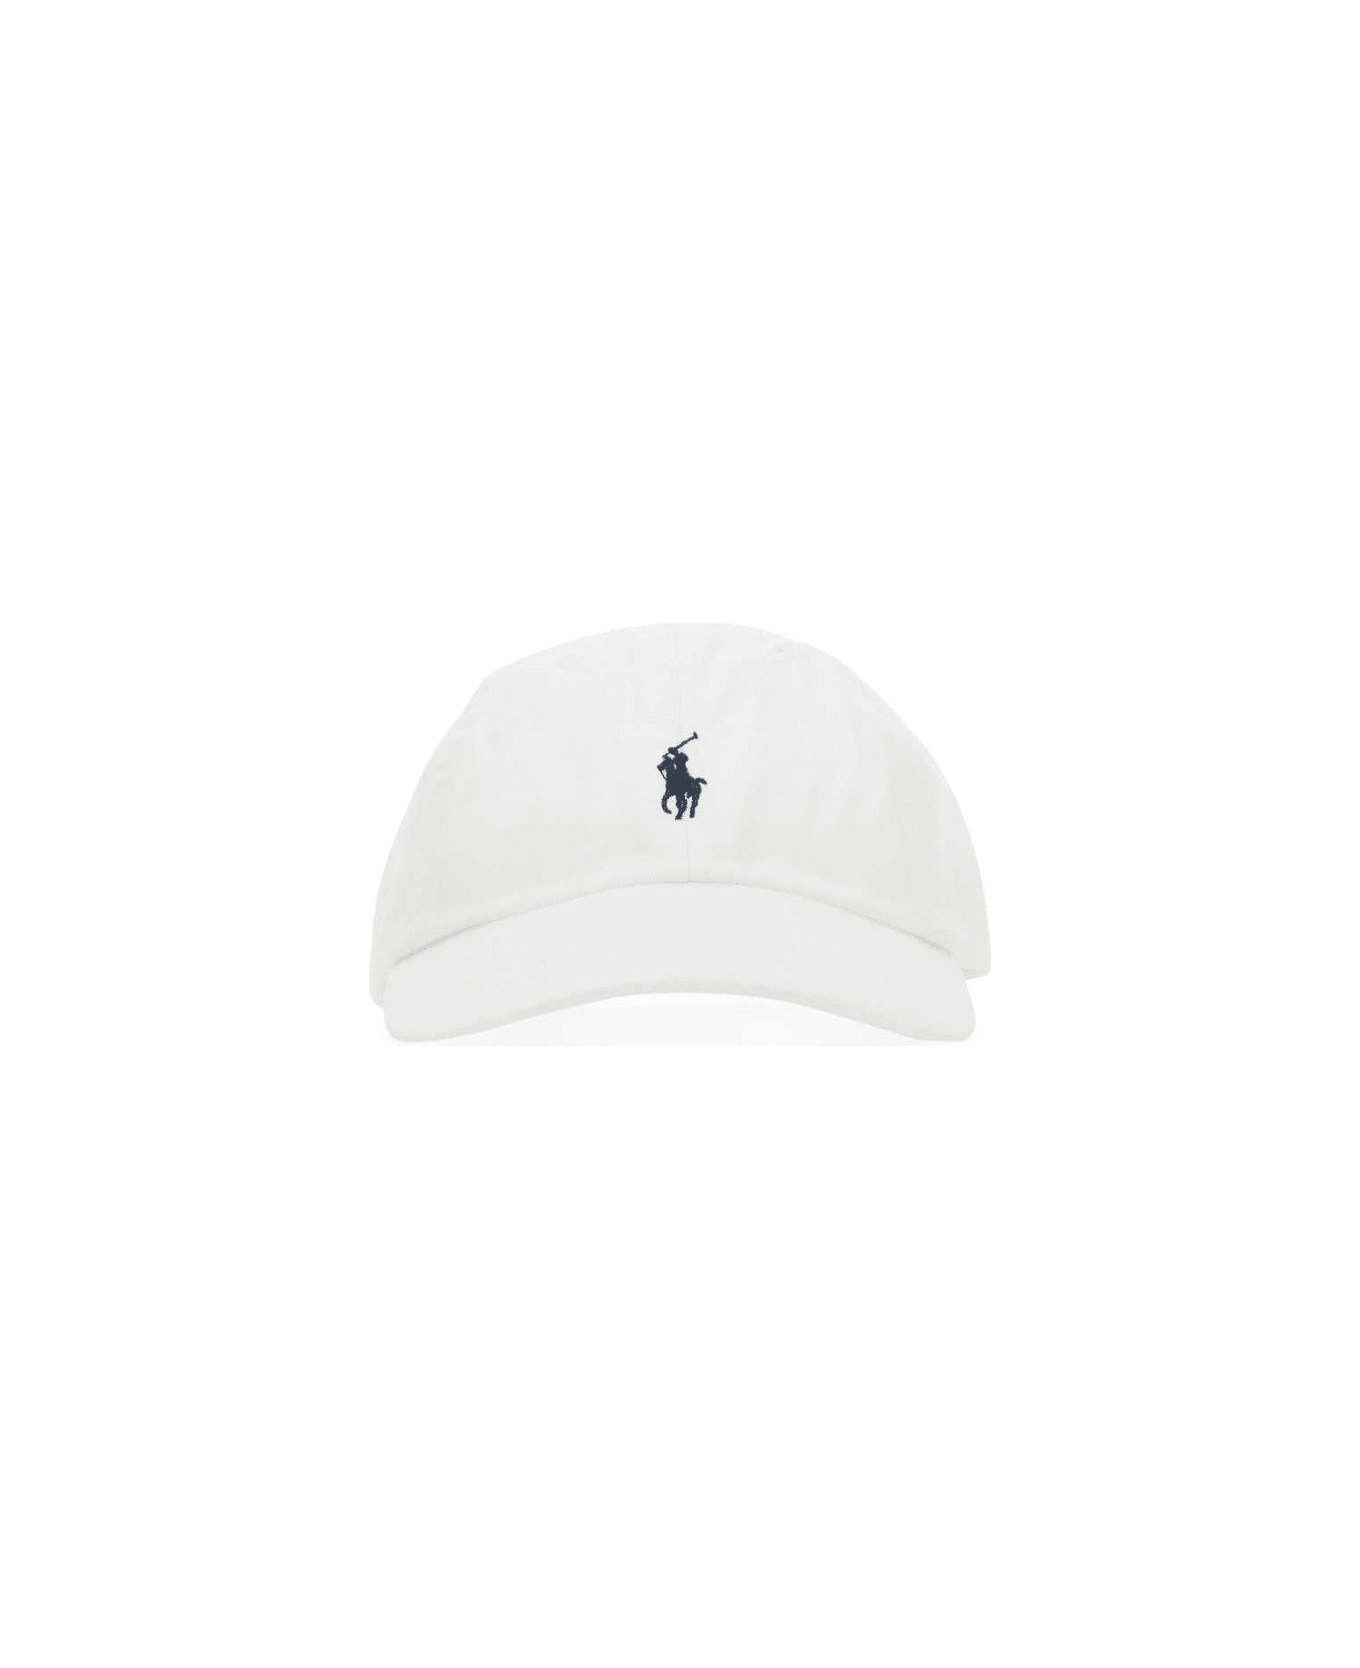 Ralph Lauren Logo Embroidered Curved Peak Baseball Cap - White